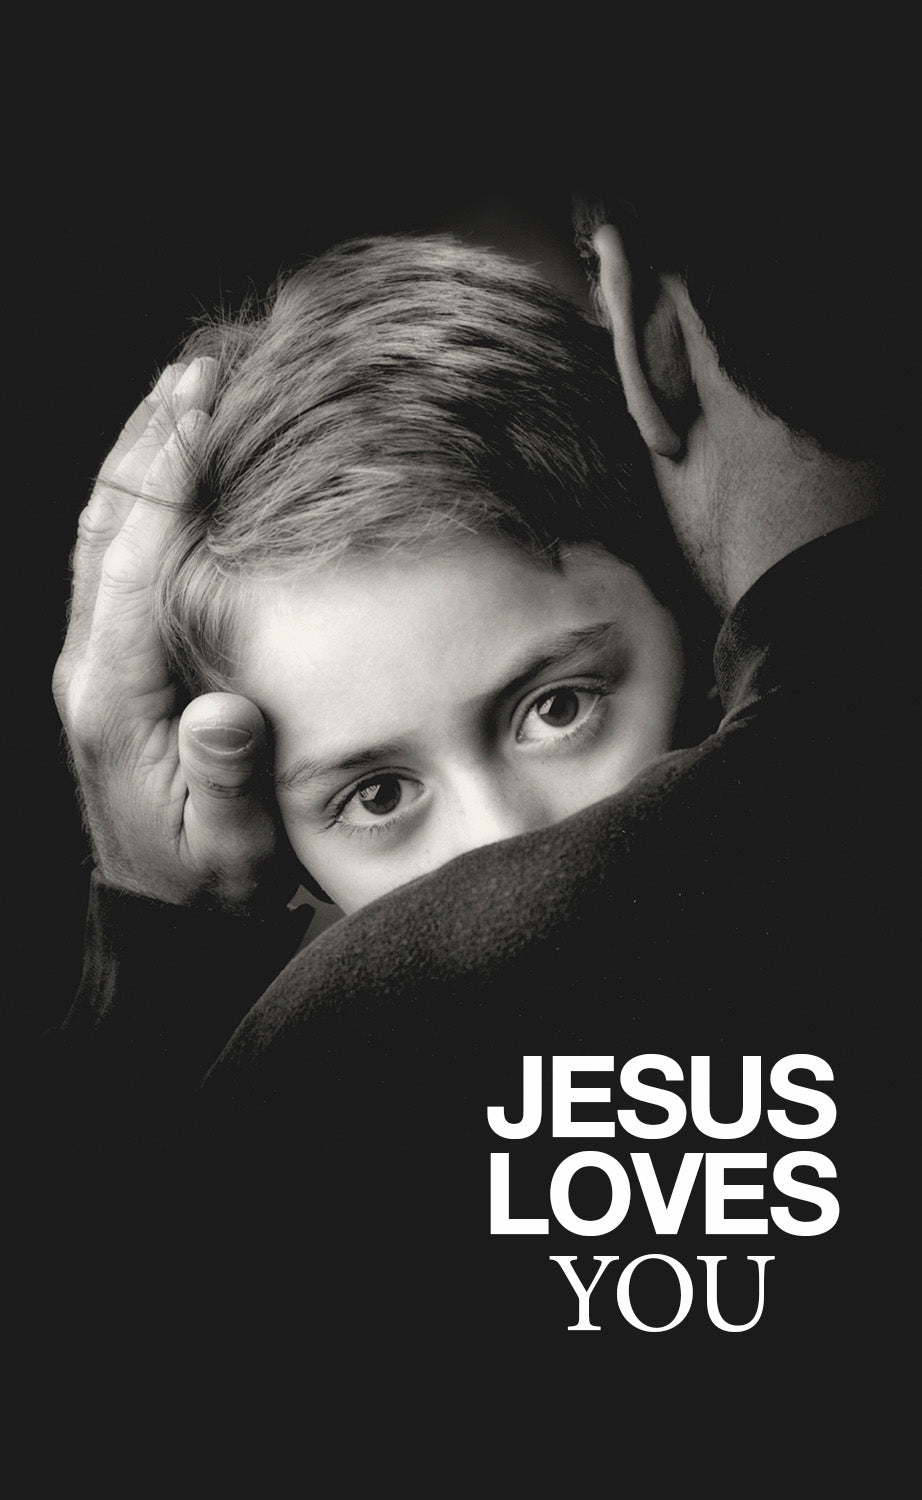 Jesus Loves You by Matthew M. Price